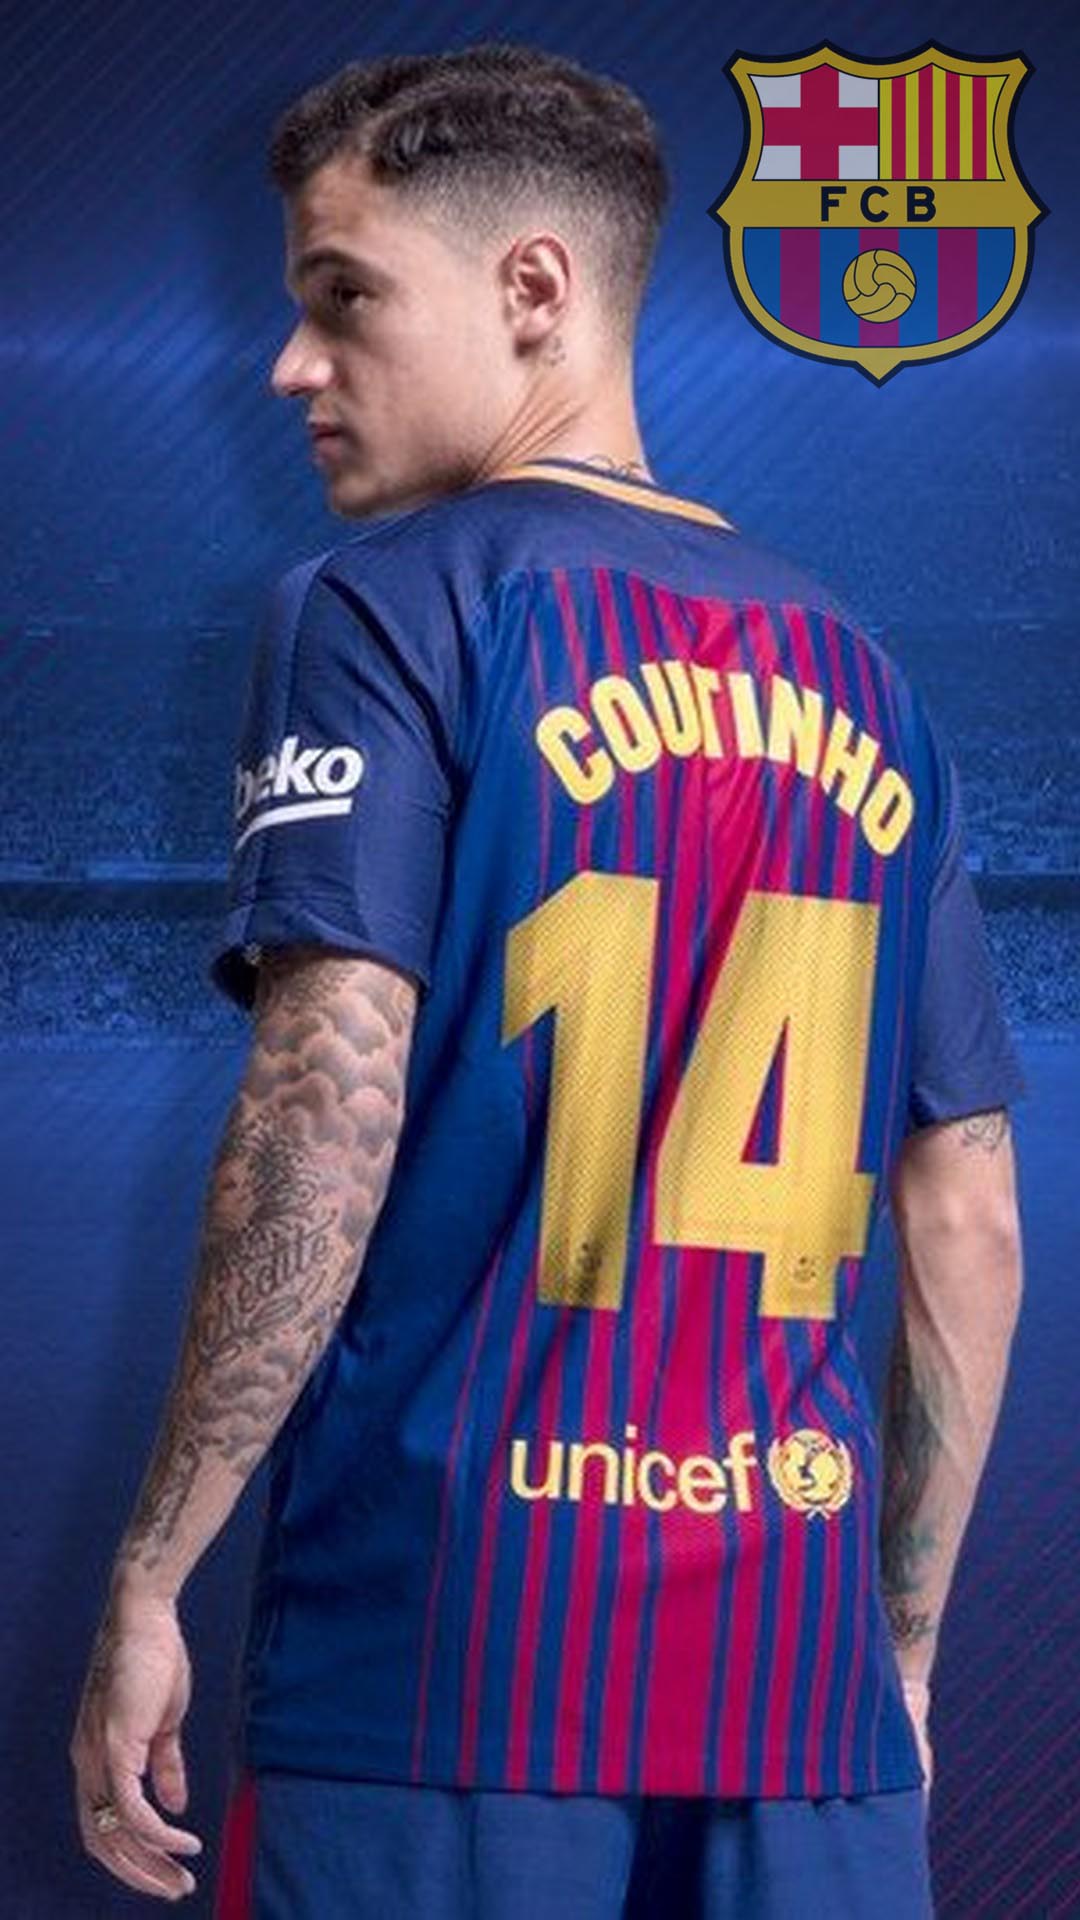 Fondo de pantalla del FC Barcelona Coutinho para Android - Fondos de pantalla de Android 2019